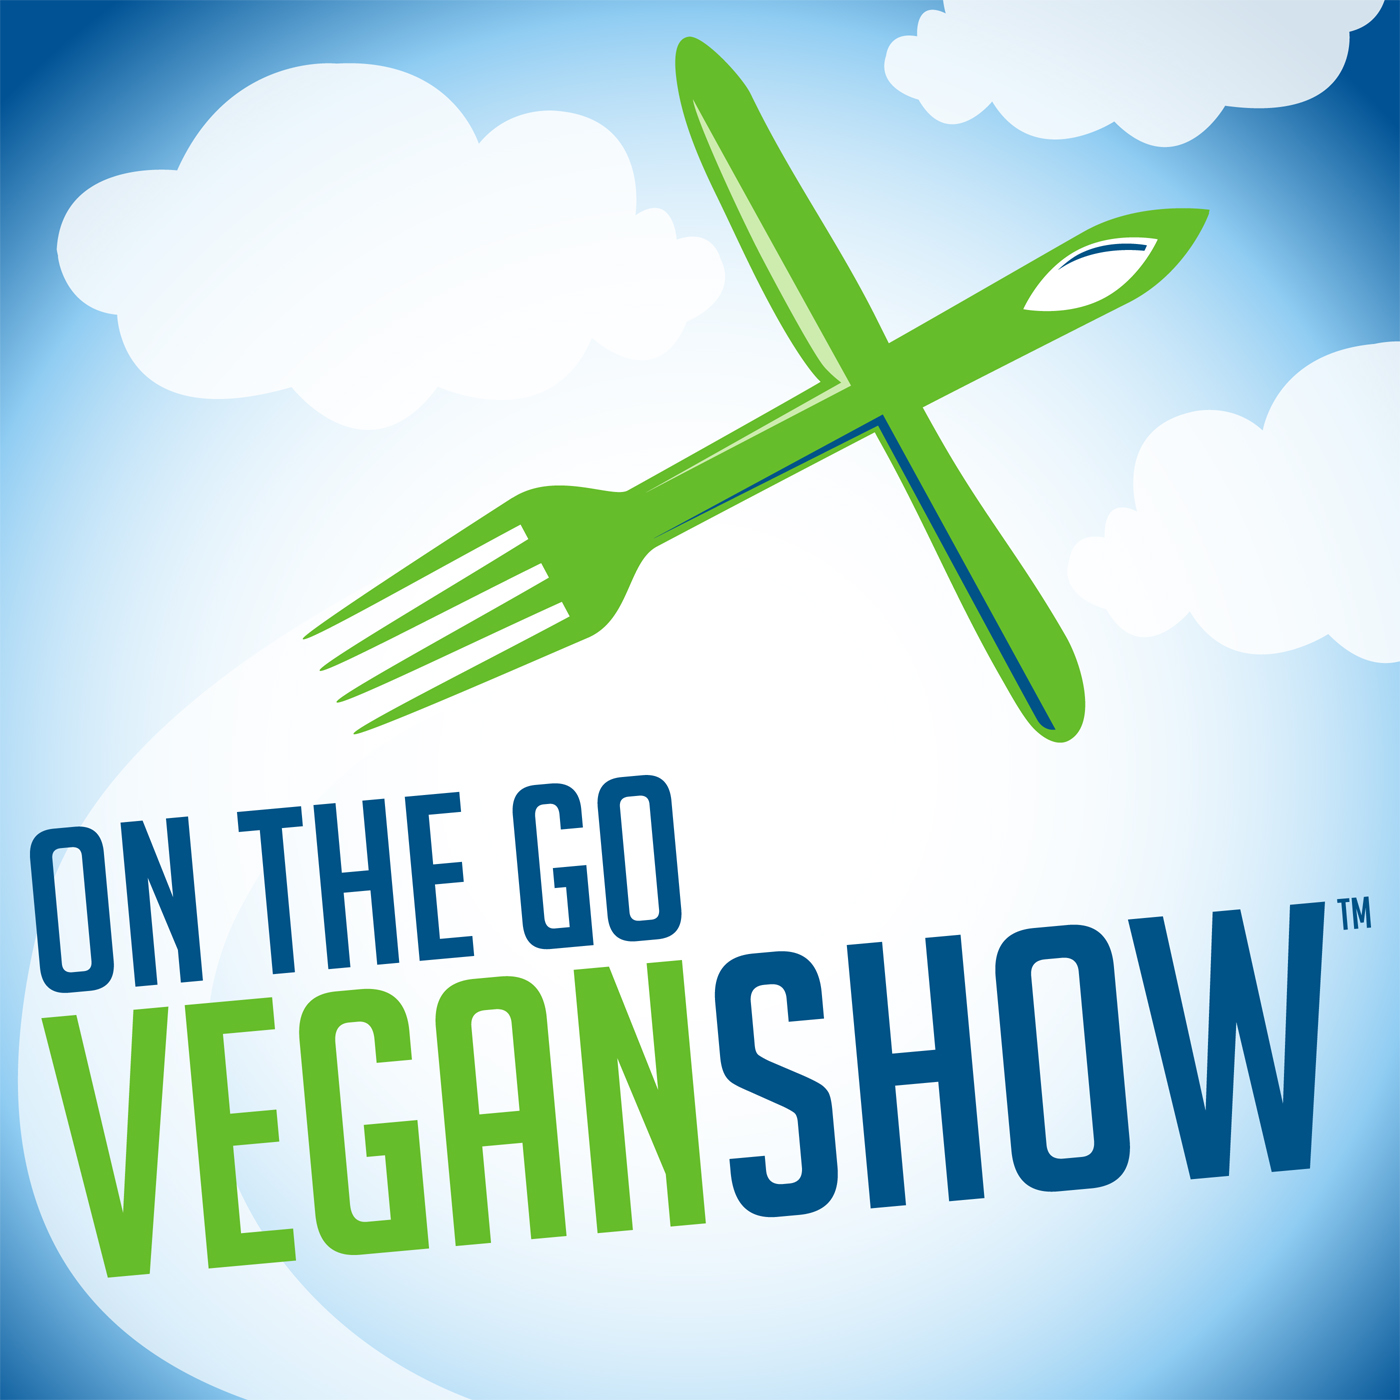 On The Go Vegan Show Podcast artwork